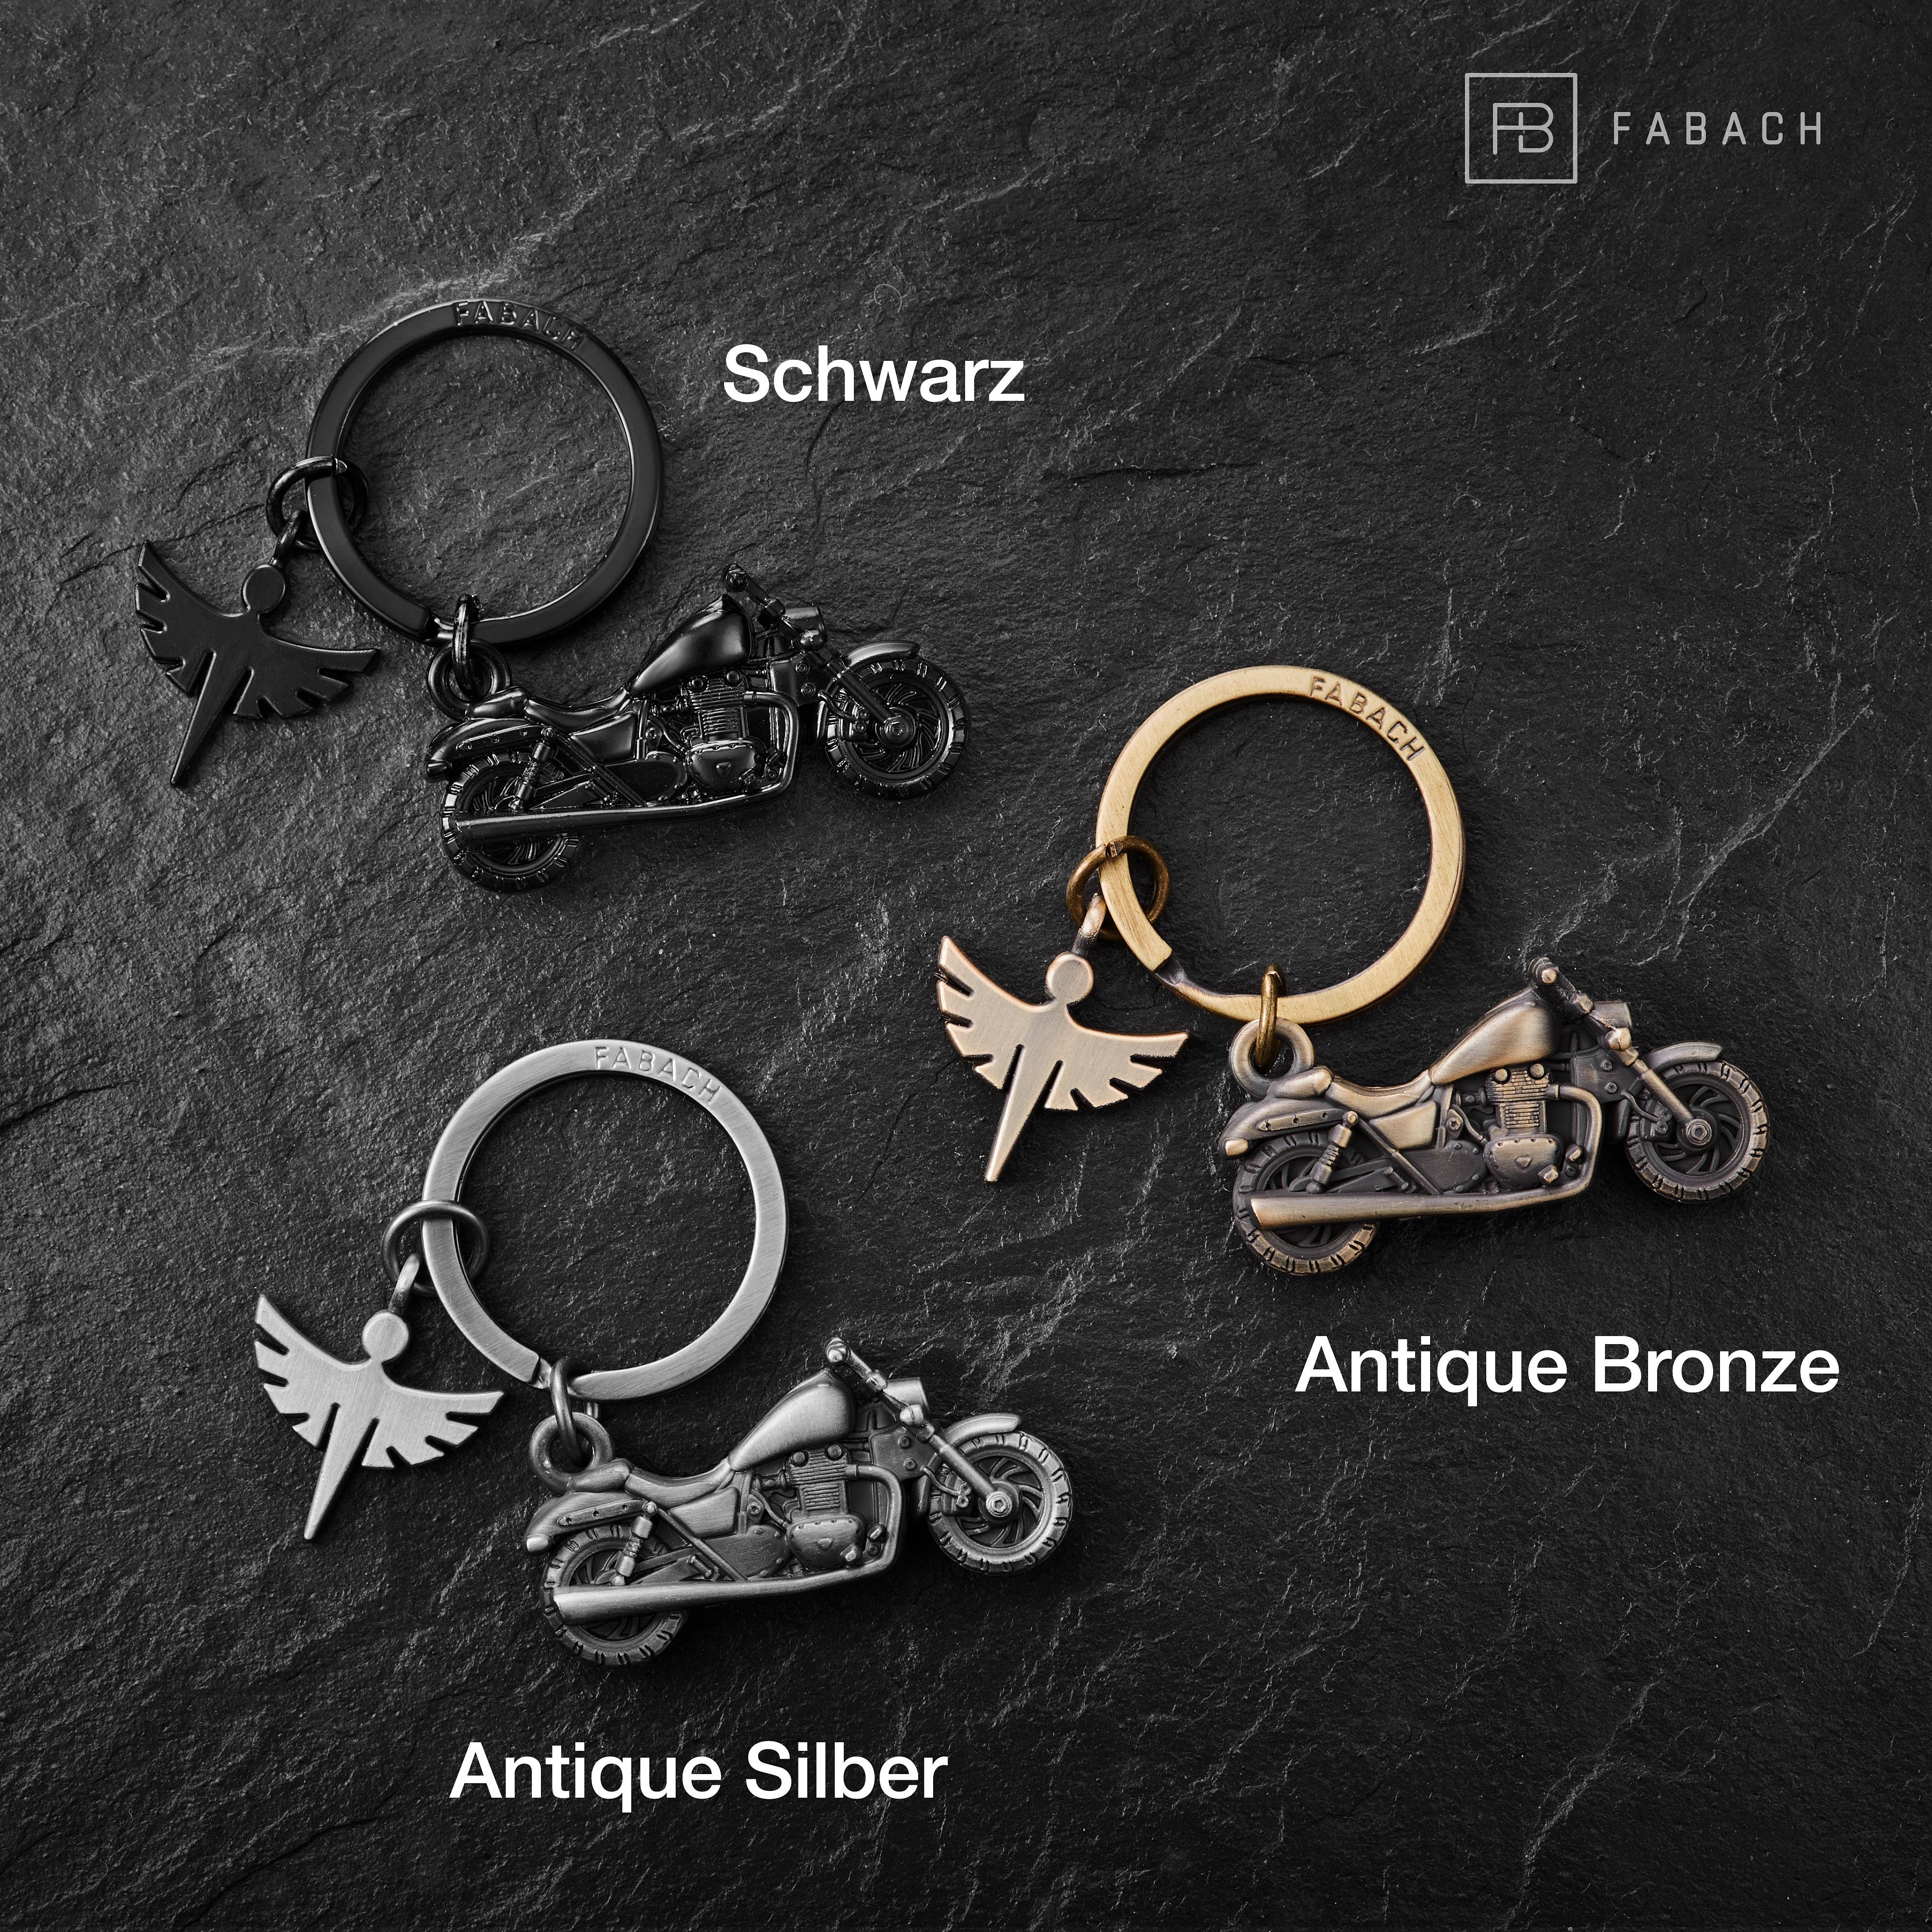 Schutzengel Antique Engel FABACH Motorrad Motorradfahrer Glücksbringer Schlüsselanhänger Chopper - Silber mit